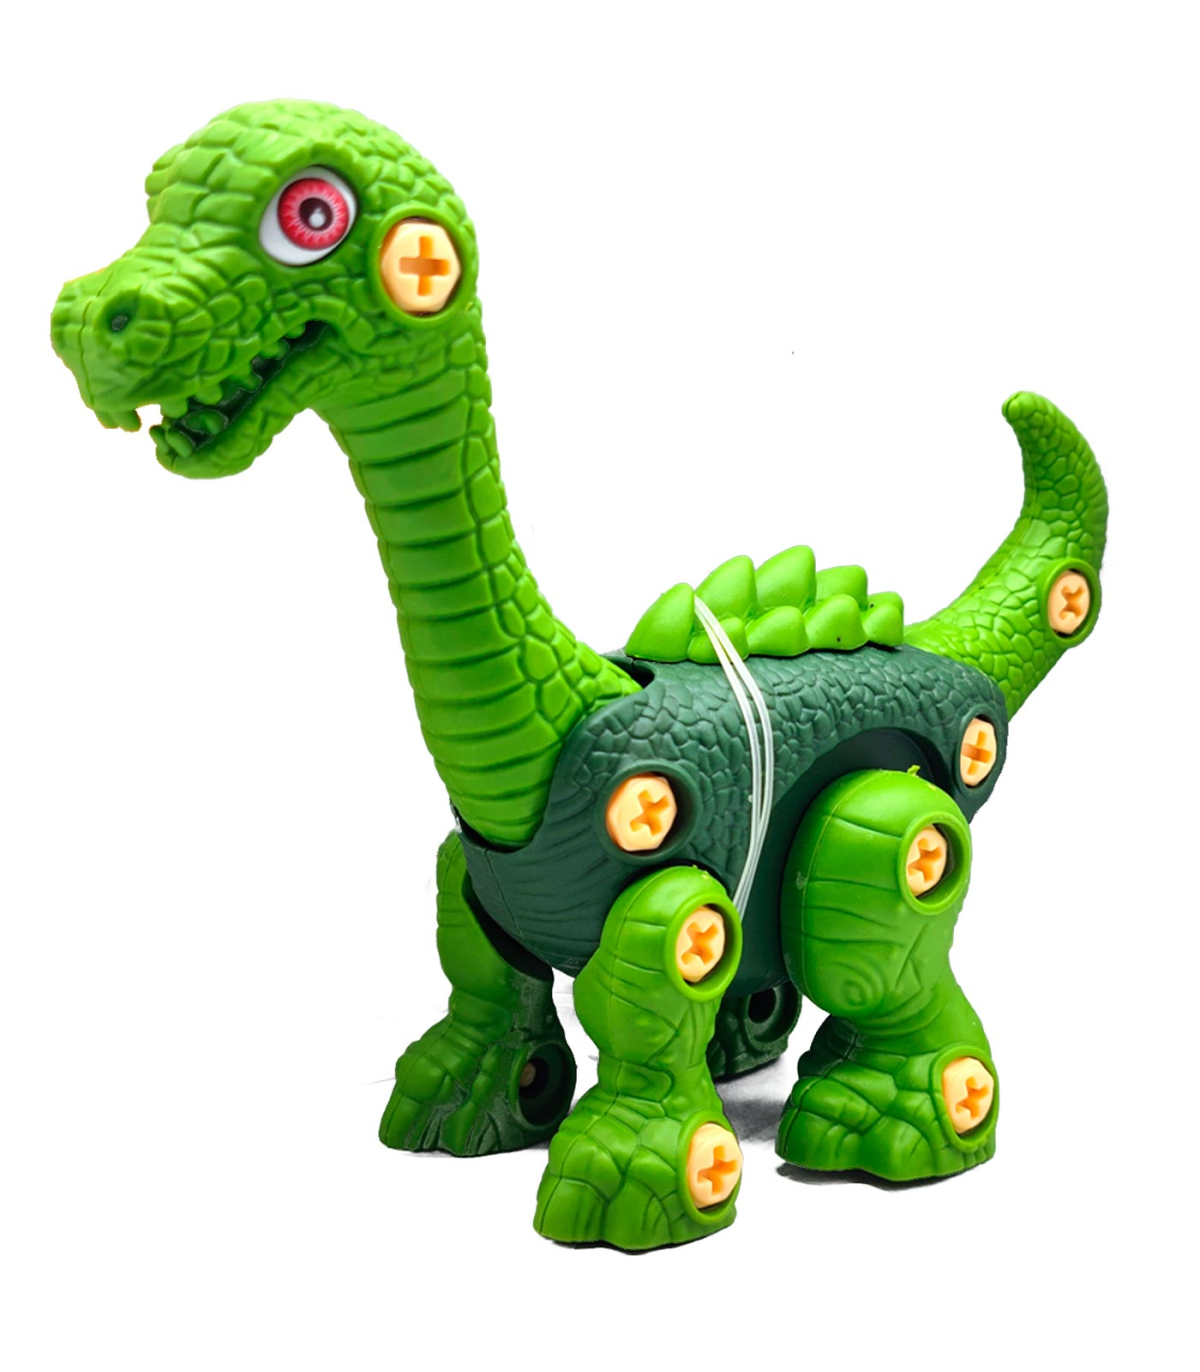 Compras USA Online - Caluma/Bolivar/Ecuador - Dinosaurios Dinosaur Juguete  de tirar hacia atrás, 6 unidades Dino Juguetes para niños y niños de 3 años,  juguetes para niños de 3,4,5 años y más